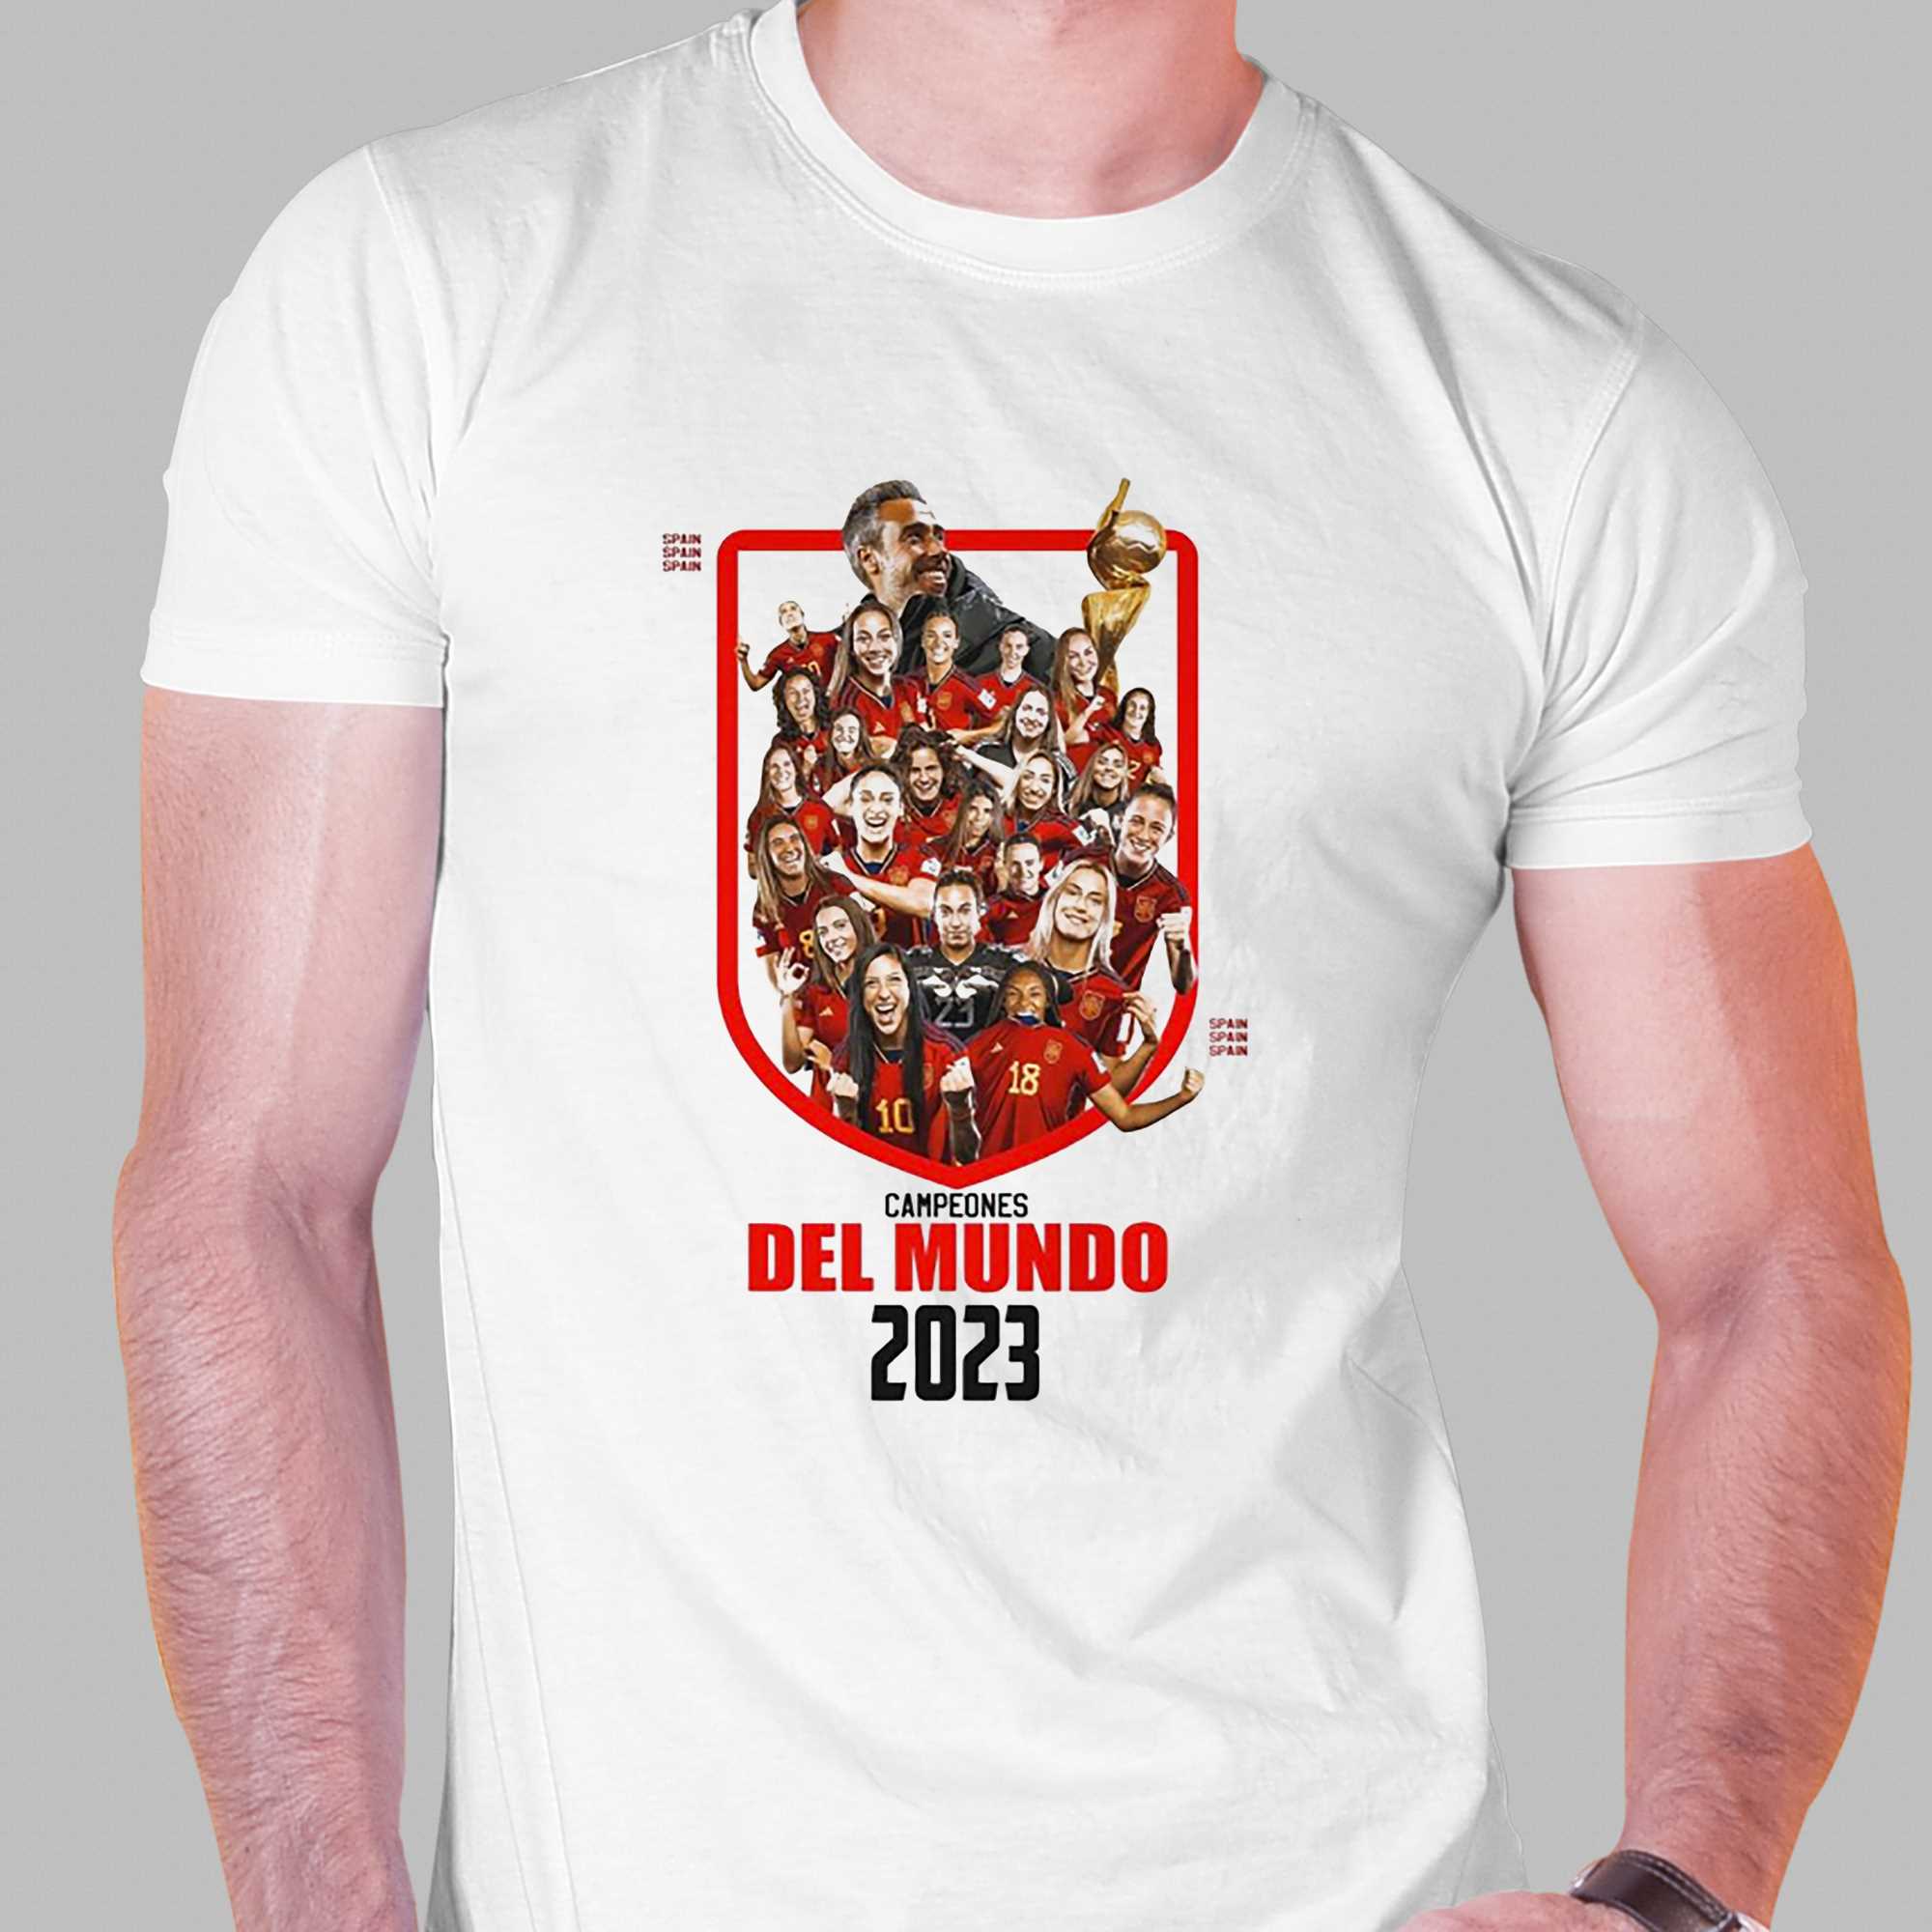 Bruins 100 Centennial 1924 – 2024 T-shirt - Shibtee Clothing